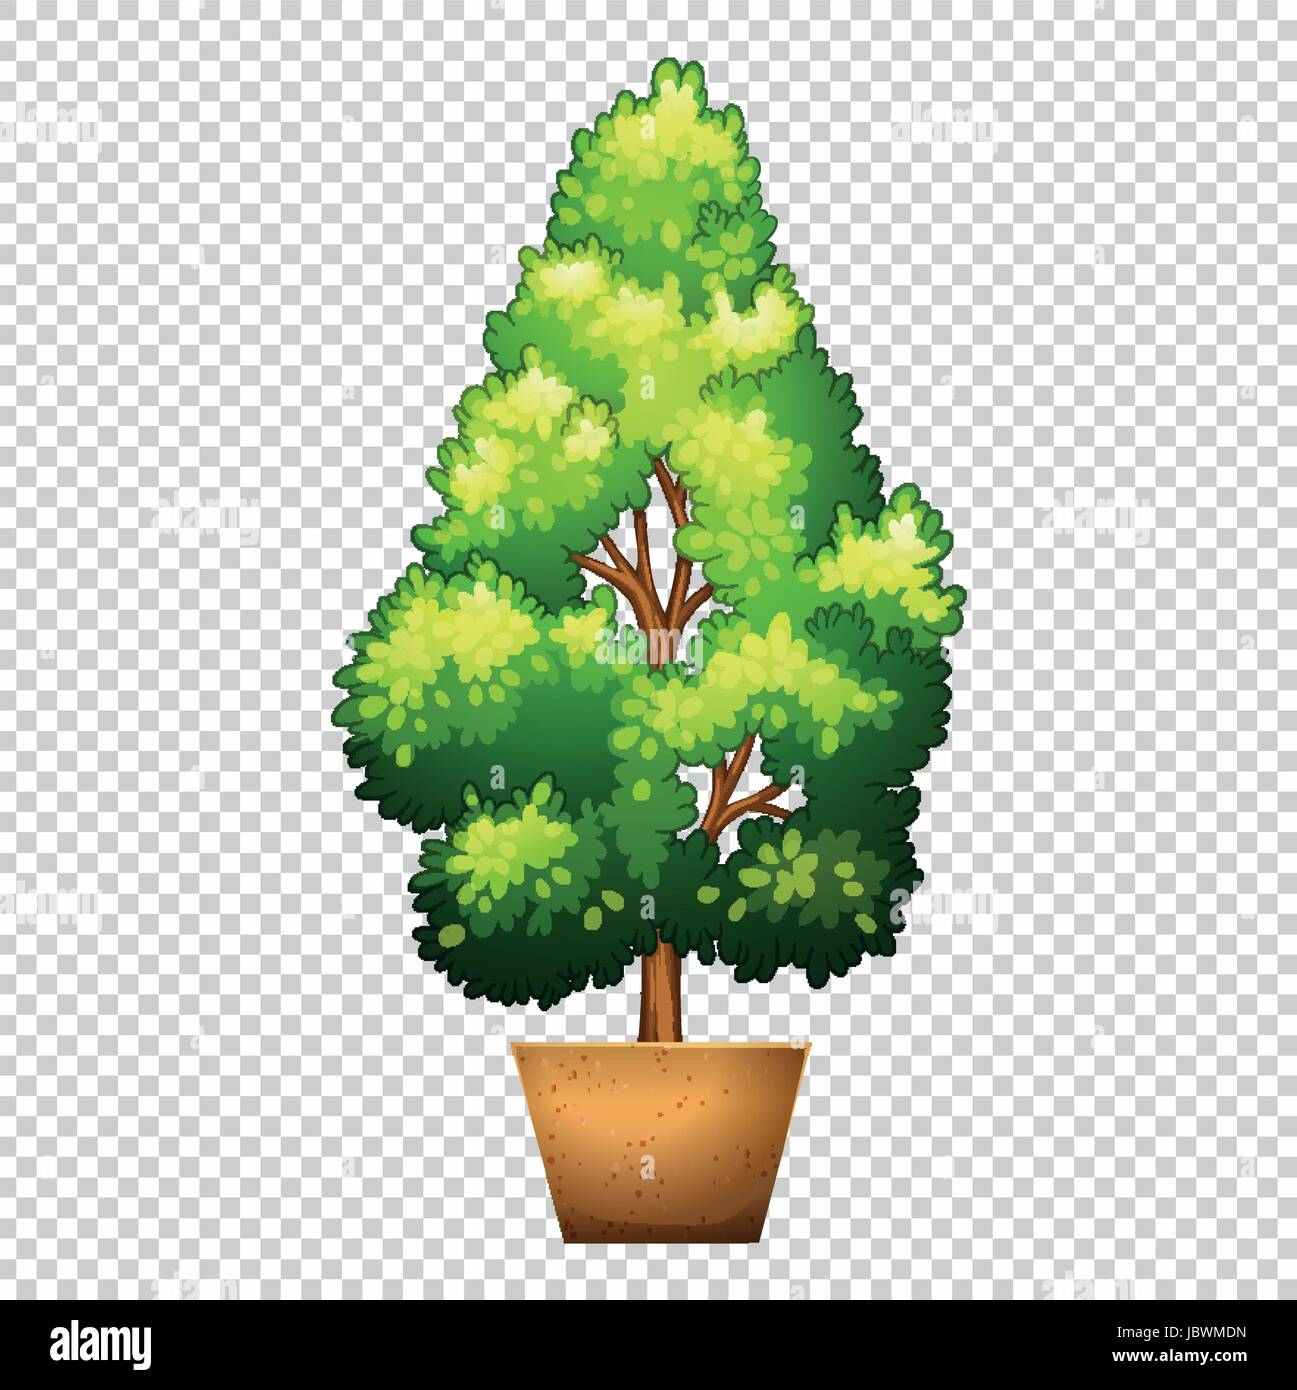 Green tree in clay pot illustration Stock Vector